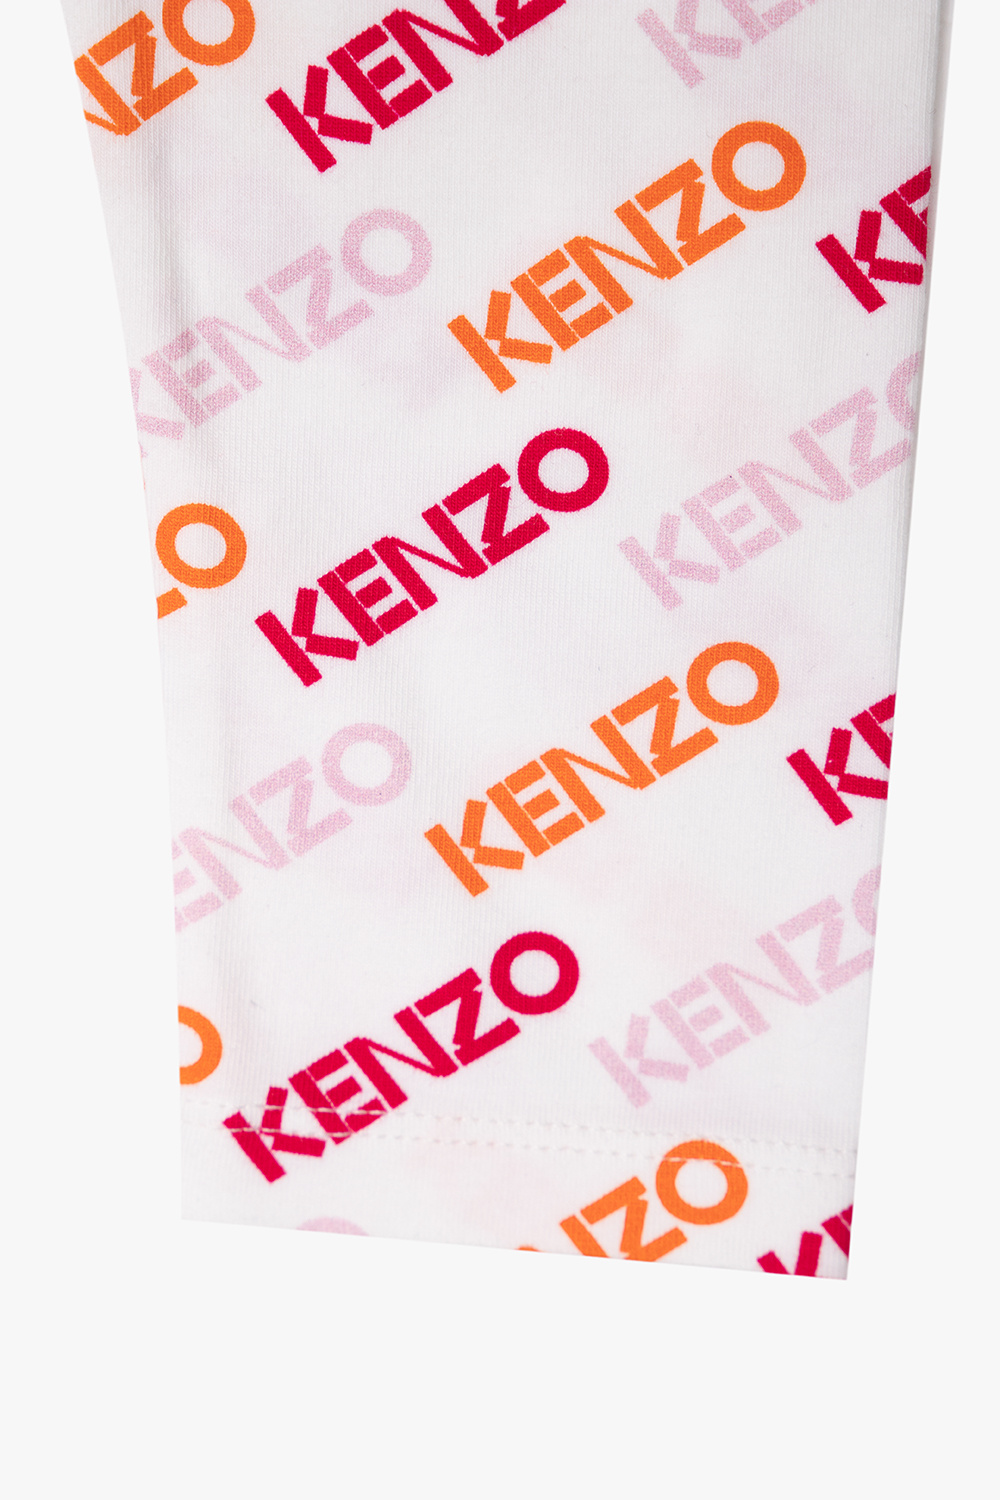 Kenzo Kids Calça Jeans Feminina Skinny Com Rasgo No